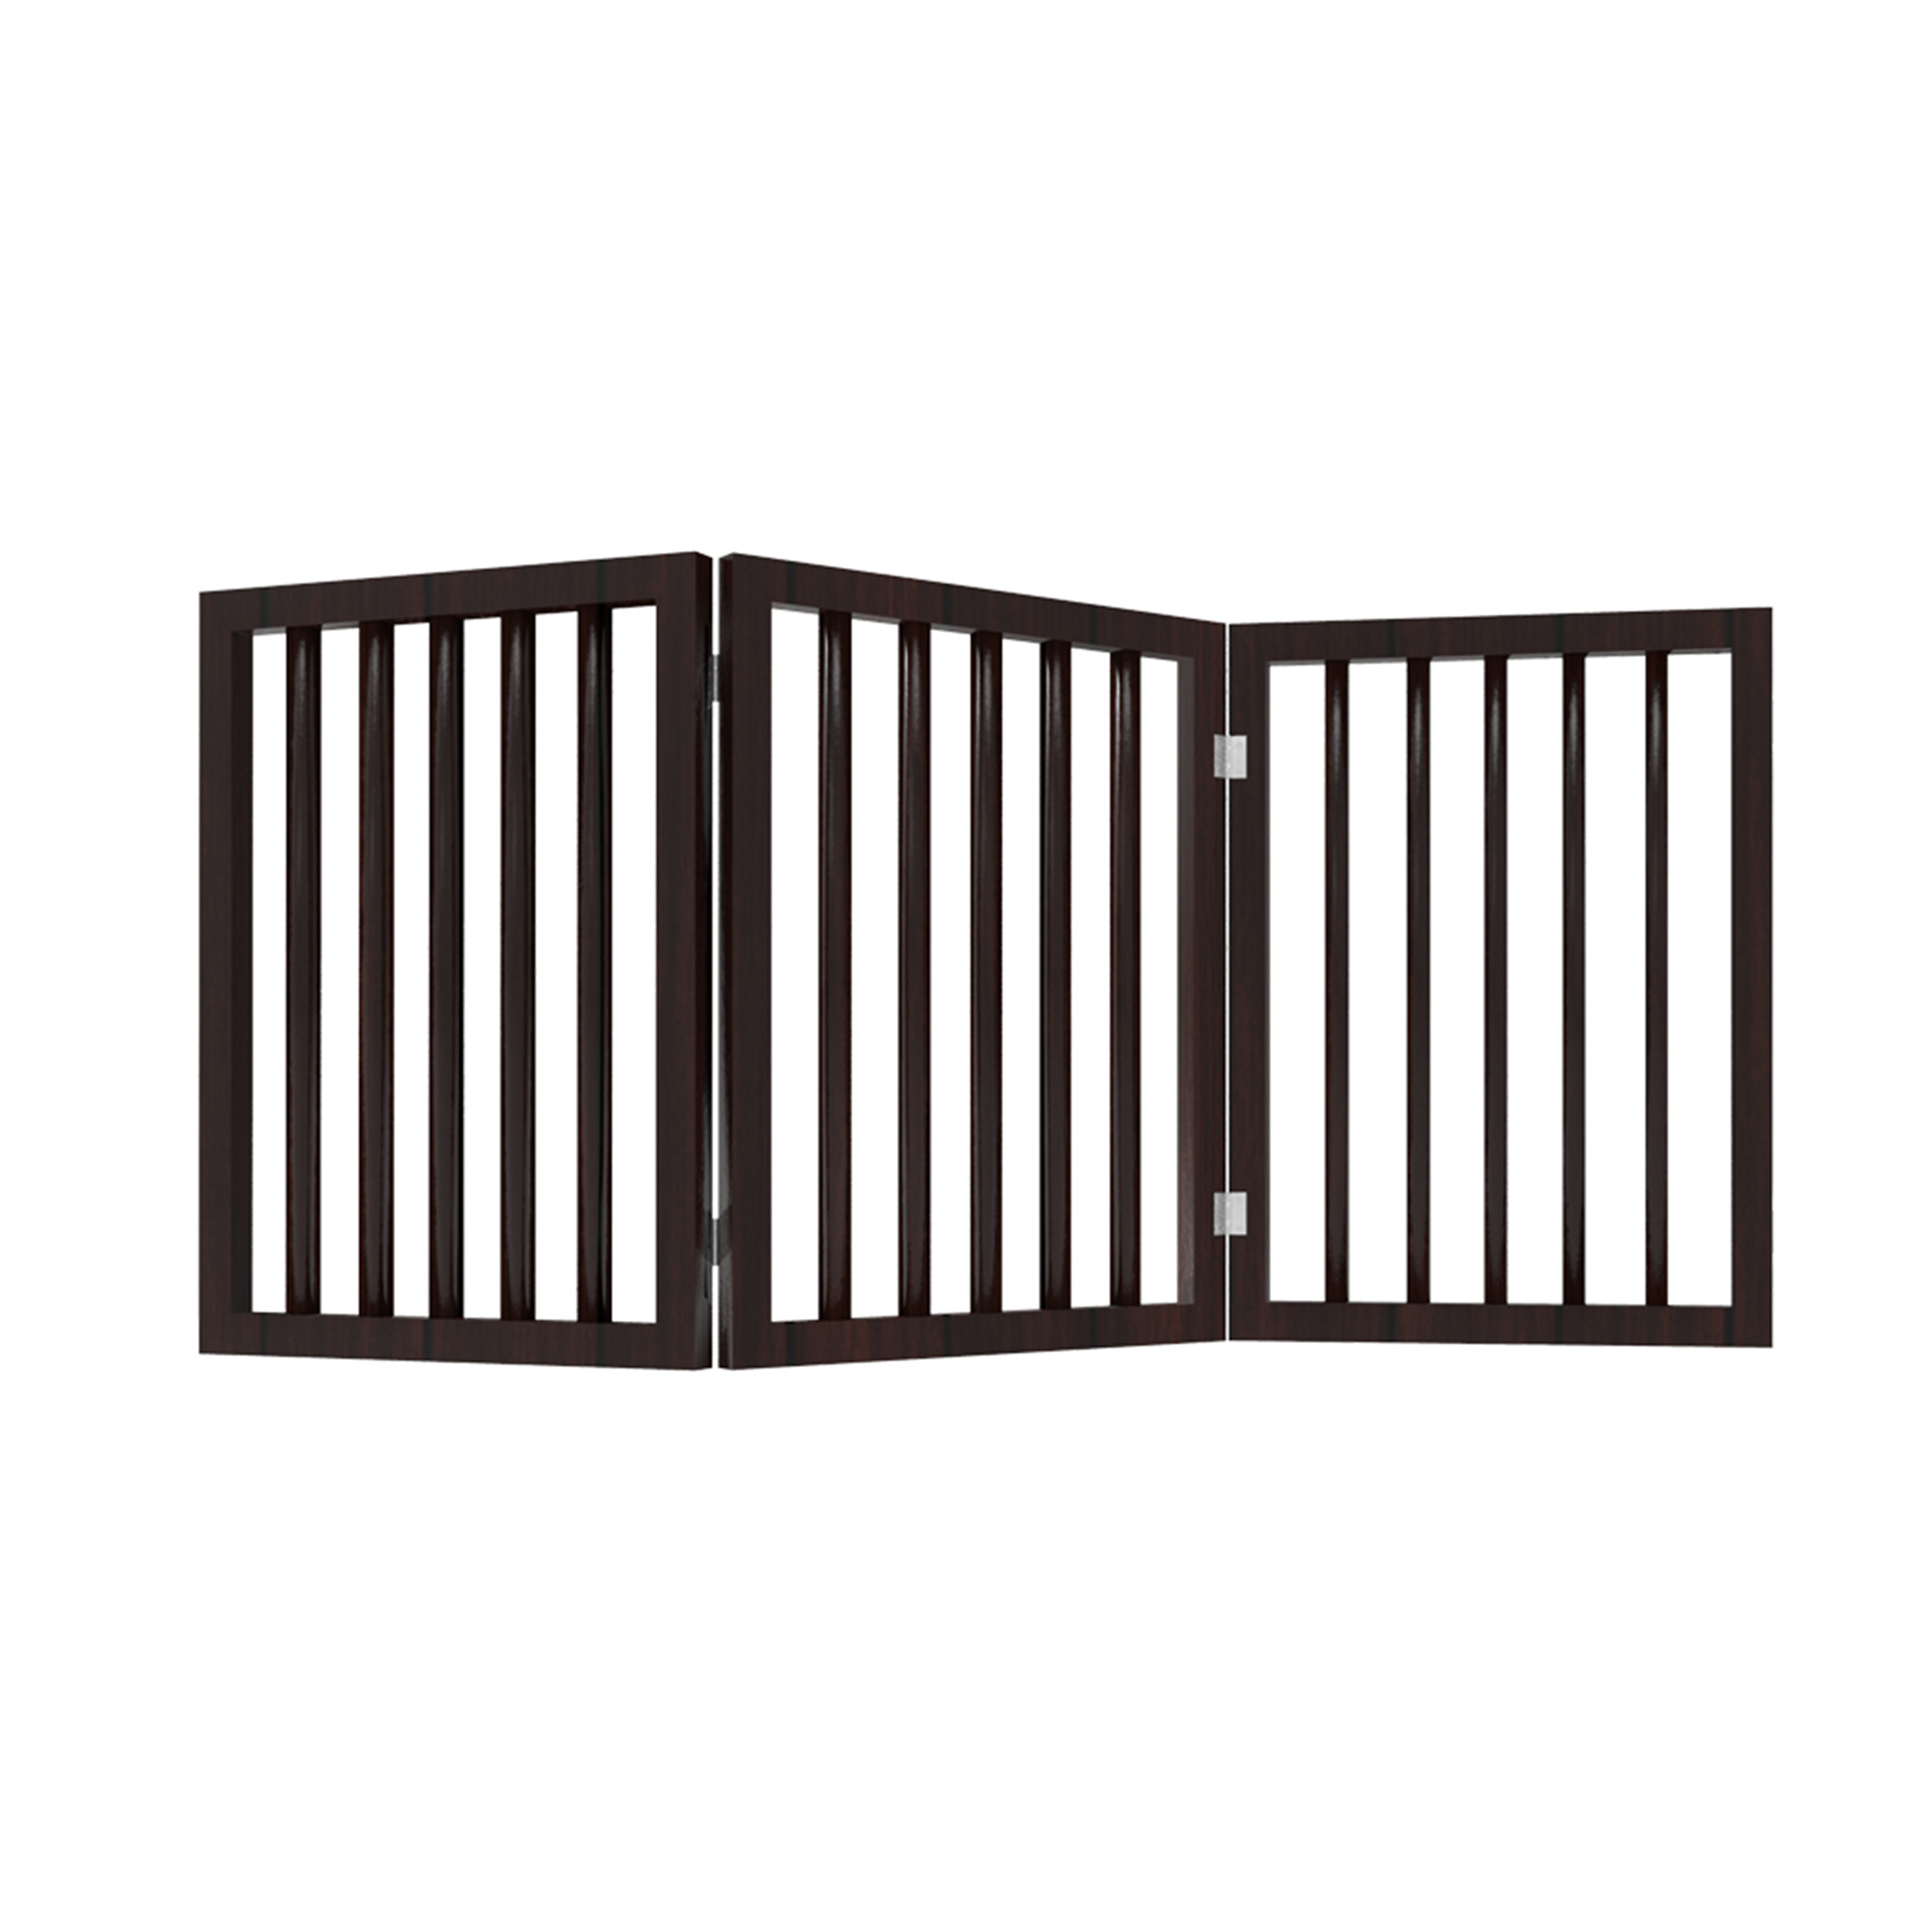 Indoor Wooden Dog Freestanding Gate For Doorways Stairs 3 Panel 23.75 Inch H - Brown